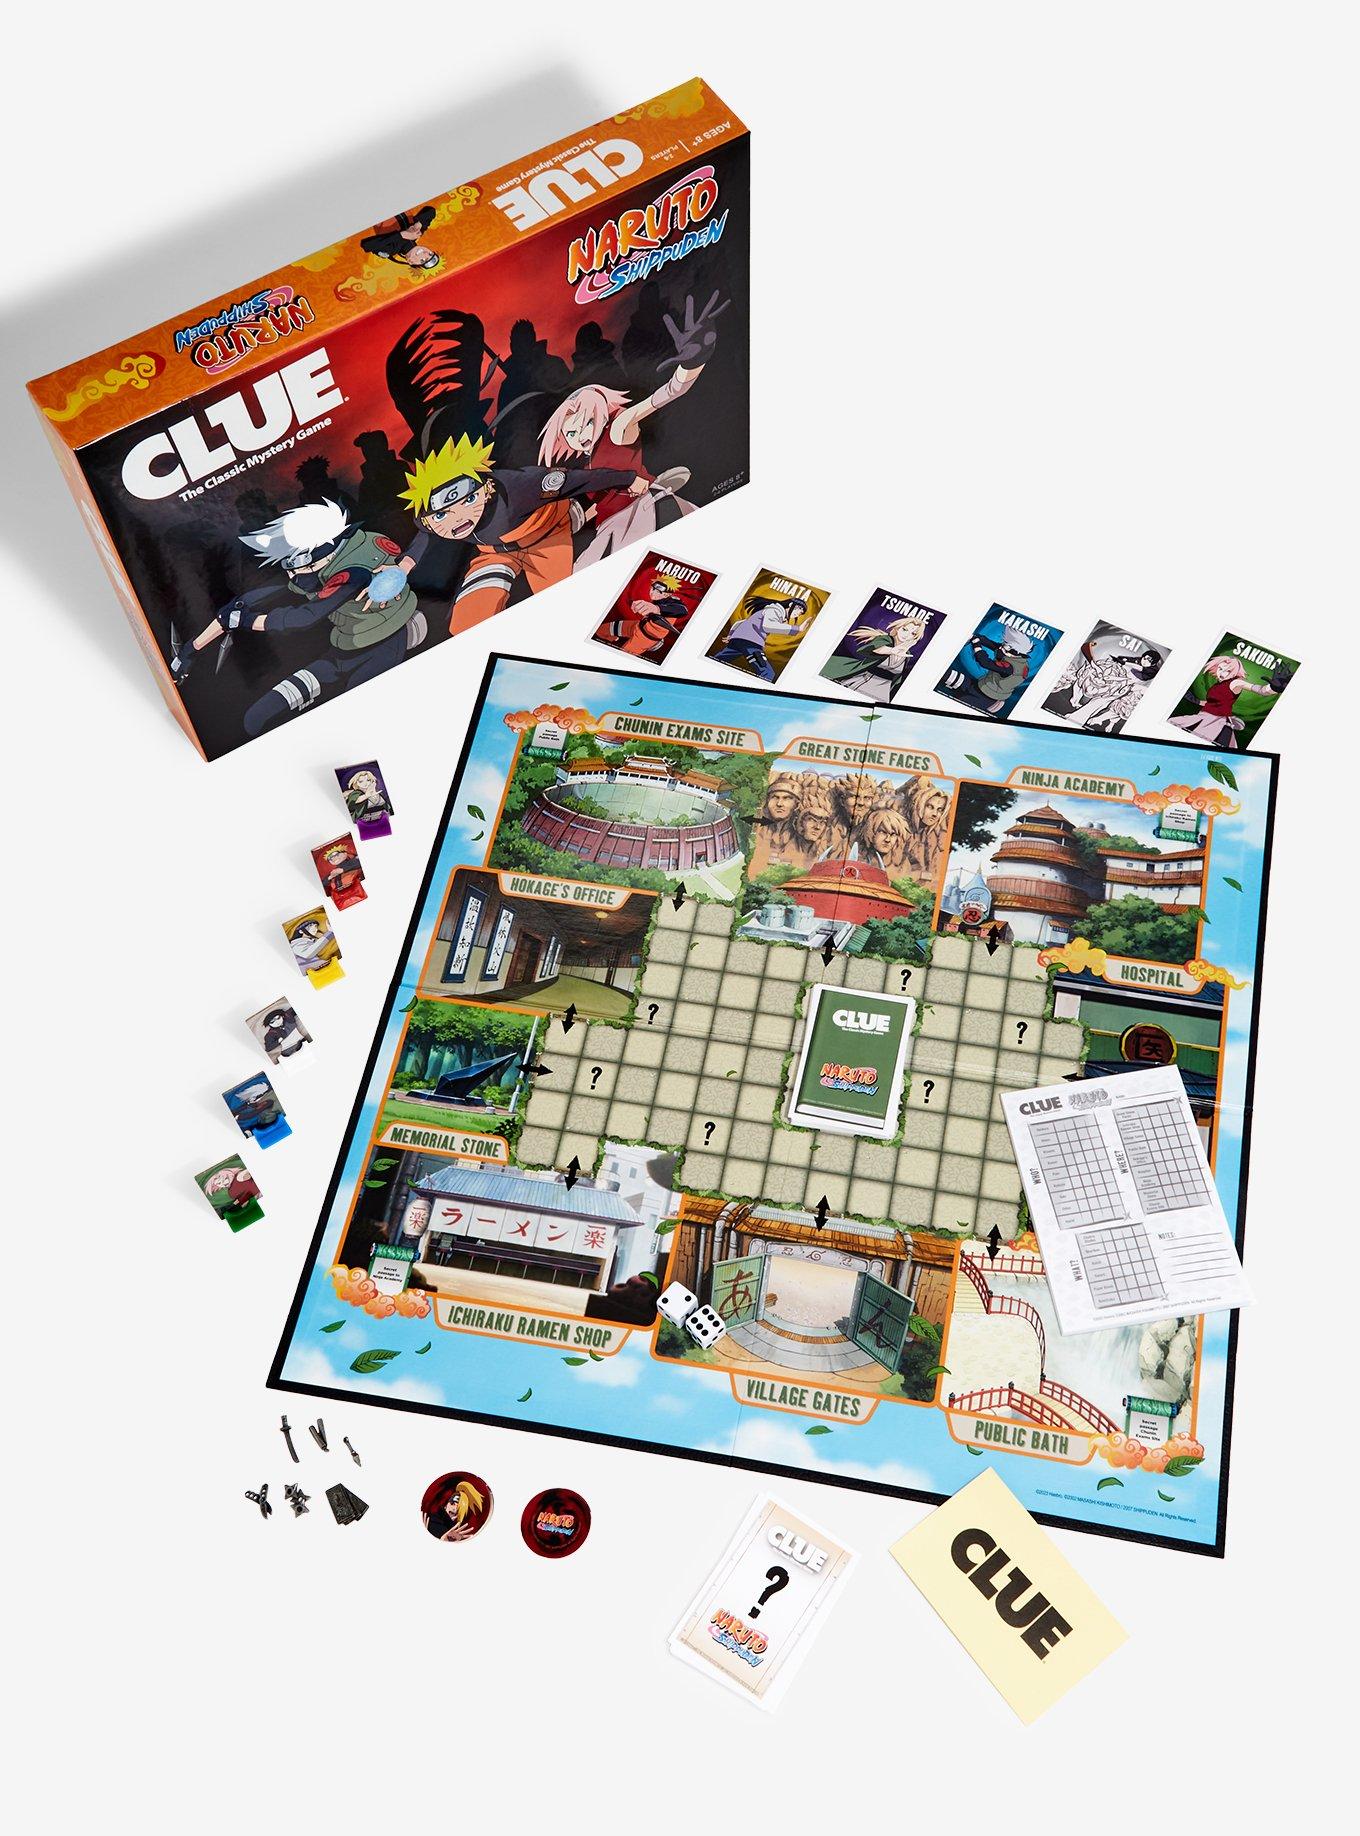 Naruto Shippuden: The Board Game, Board Game